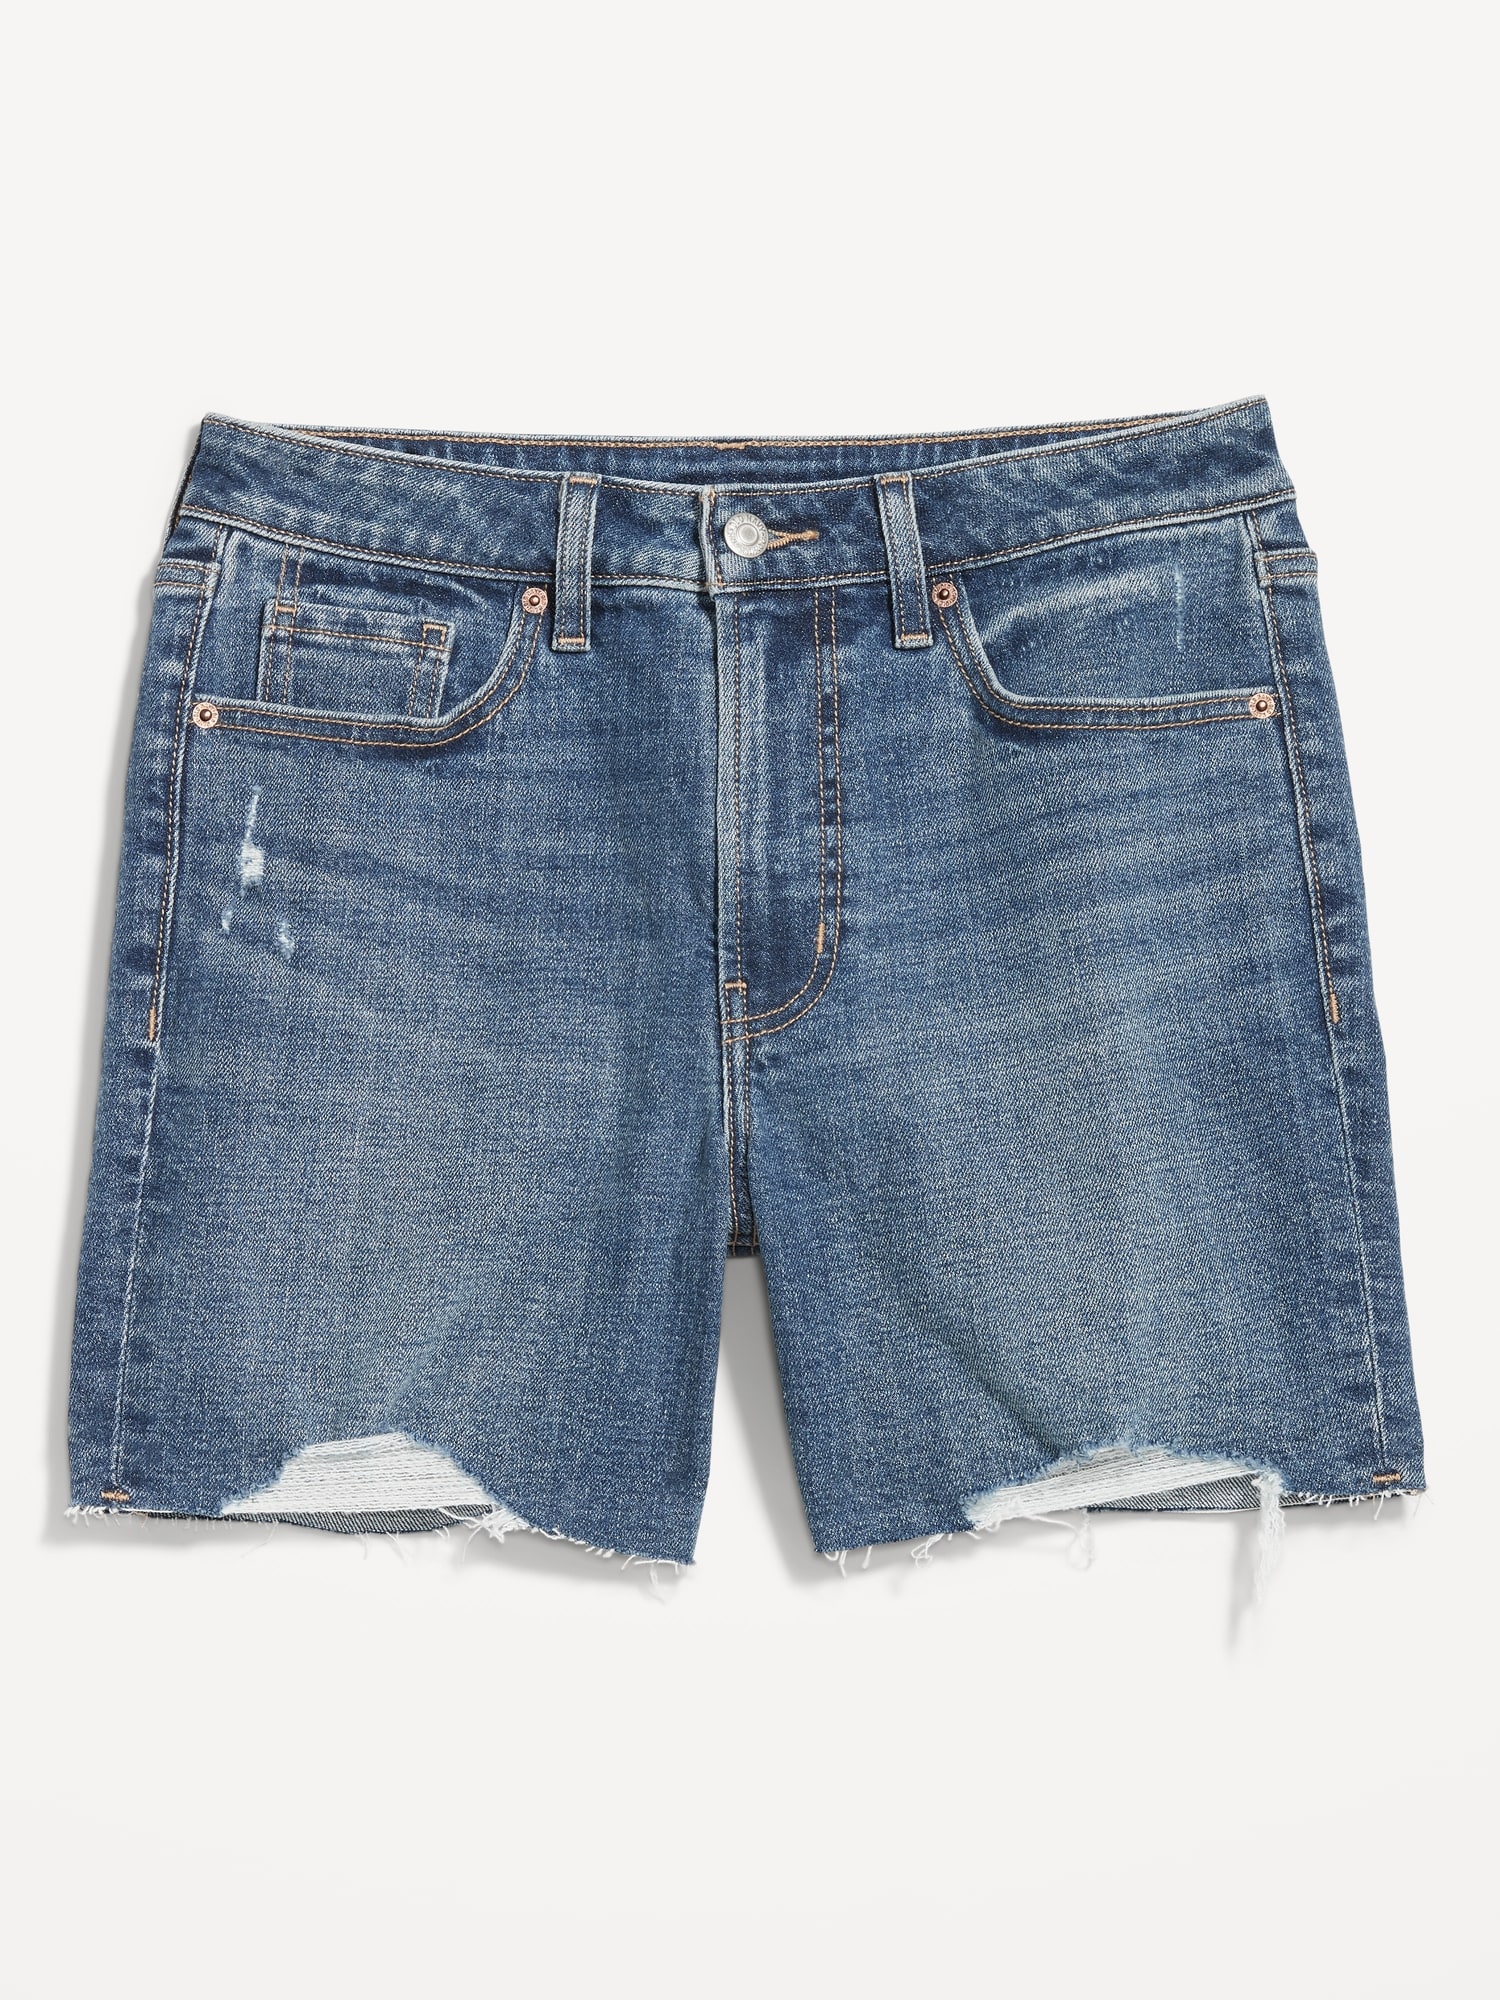 High-Waisted OG Straight Super-Short Jean Shorts -- 1.5-inch inseam